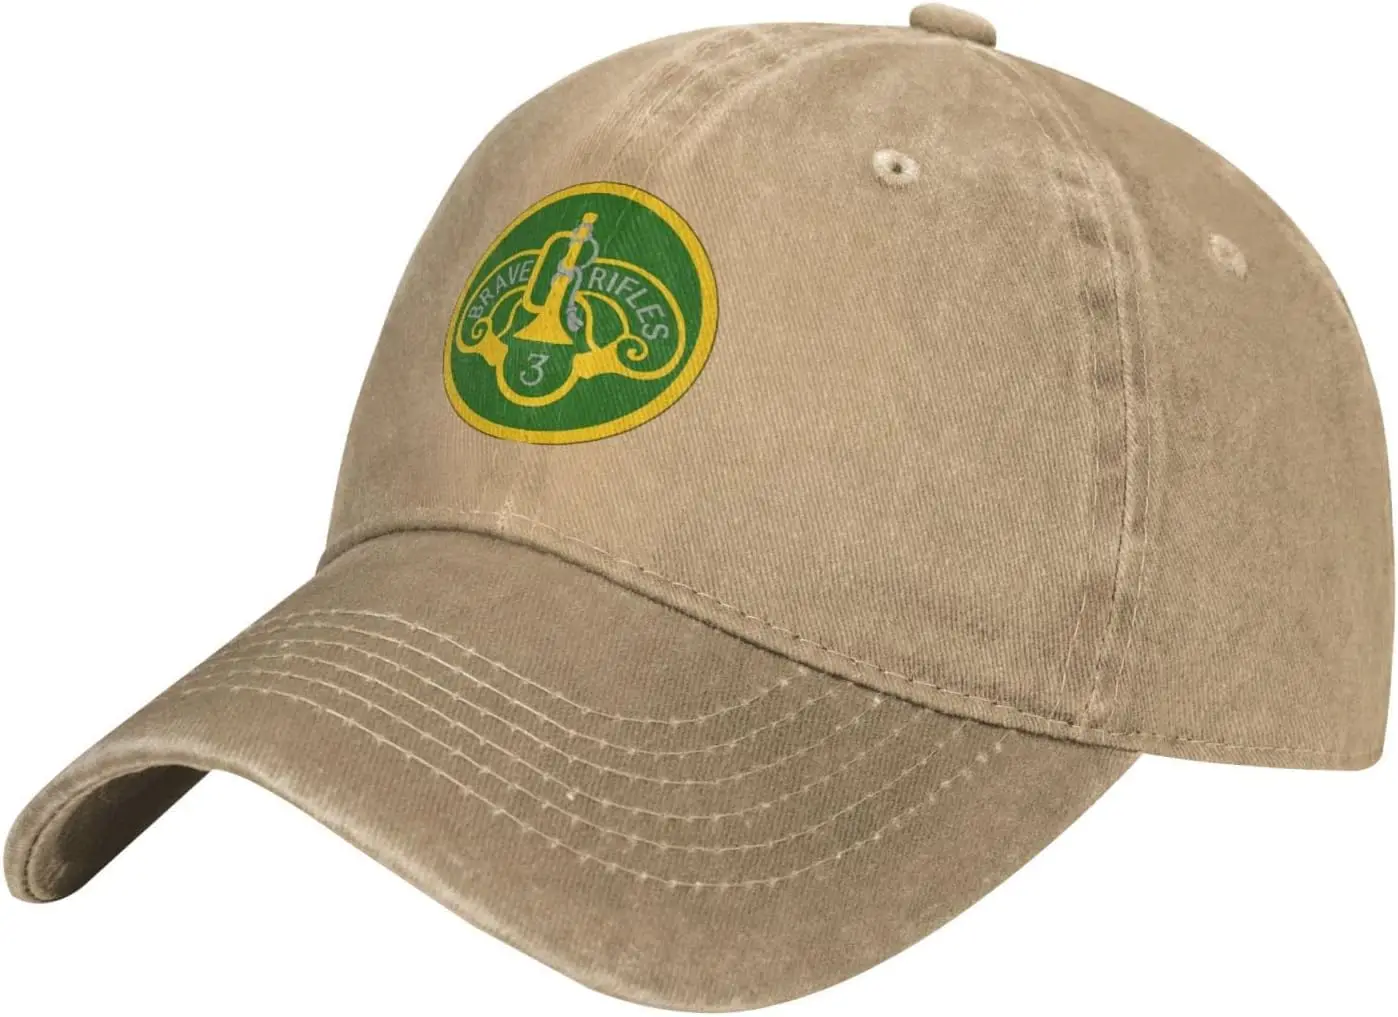 

Us 3D Armored Cavalry Regiment Cowboy Hats for Men Women, Adjustable Cotton Denim Baseball Cap